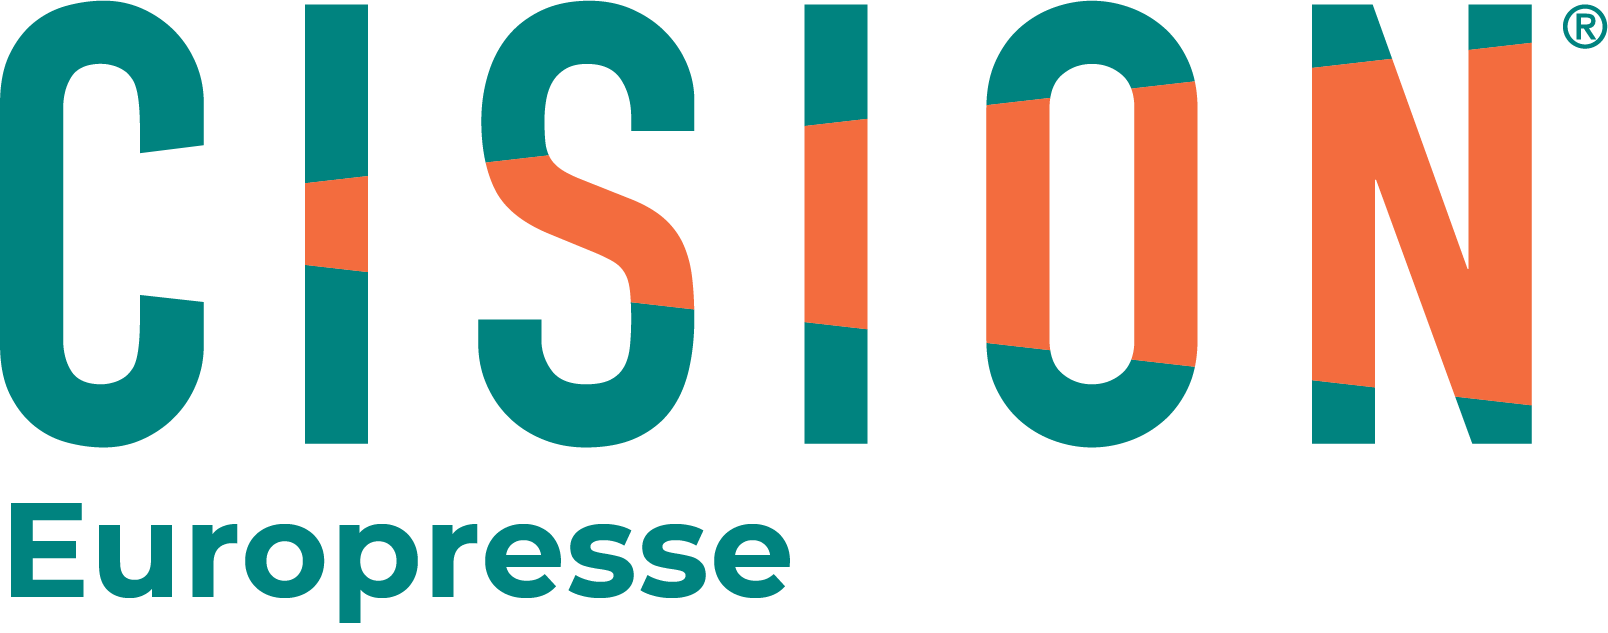 Europresse logo